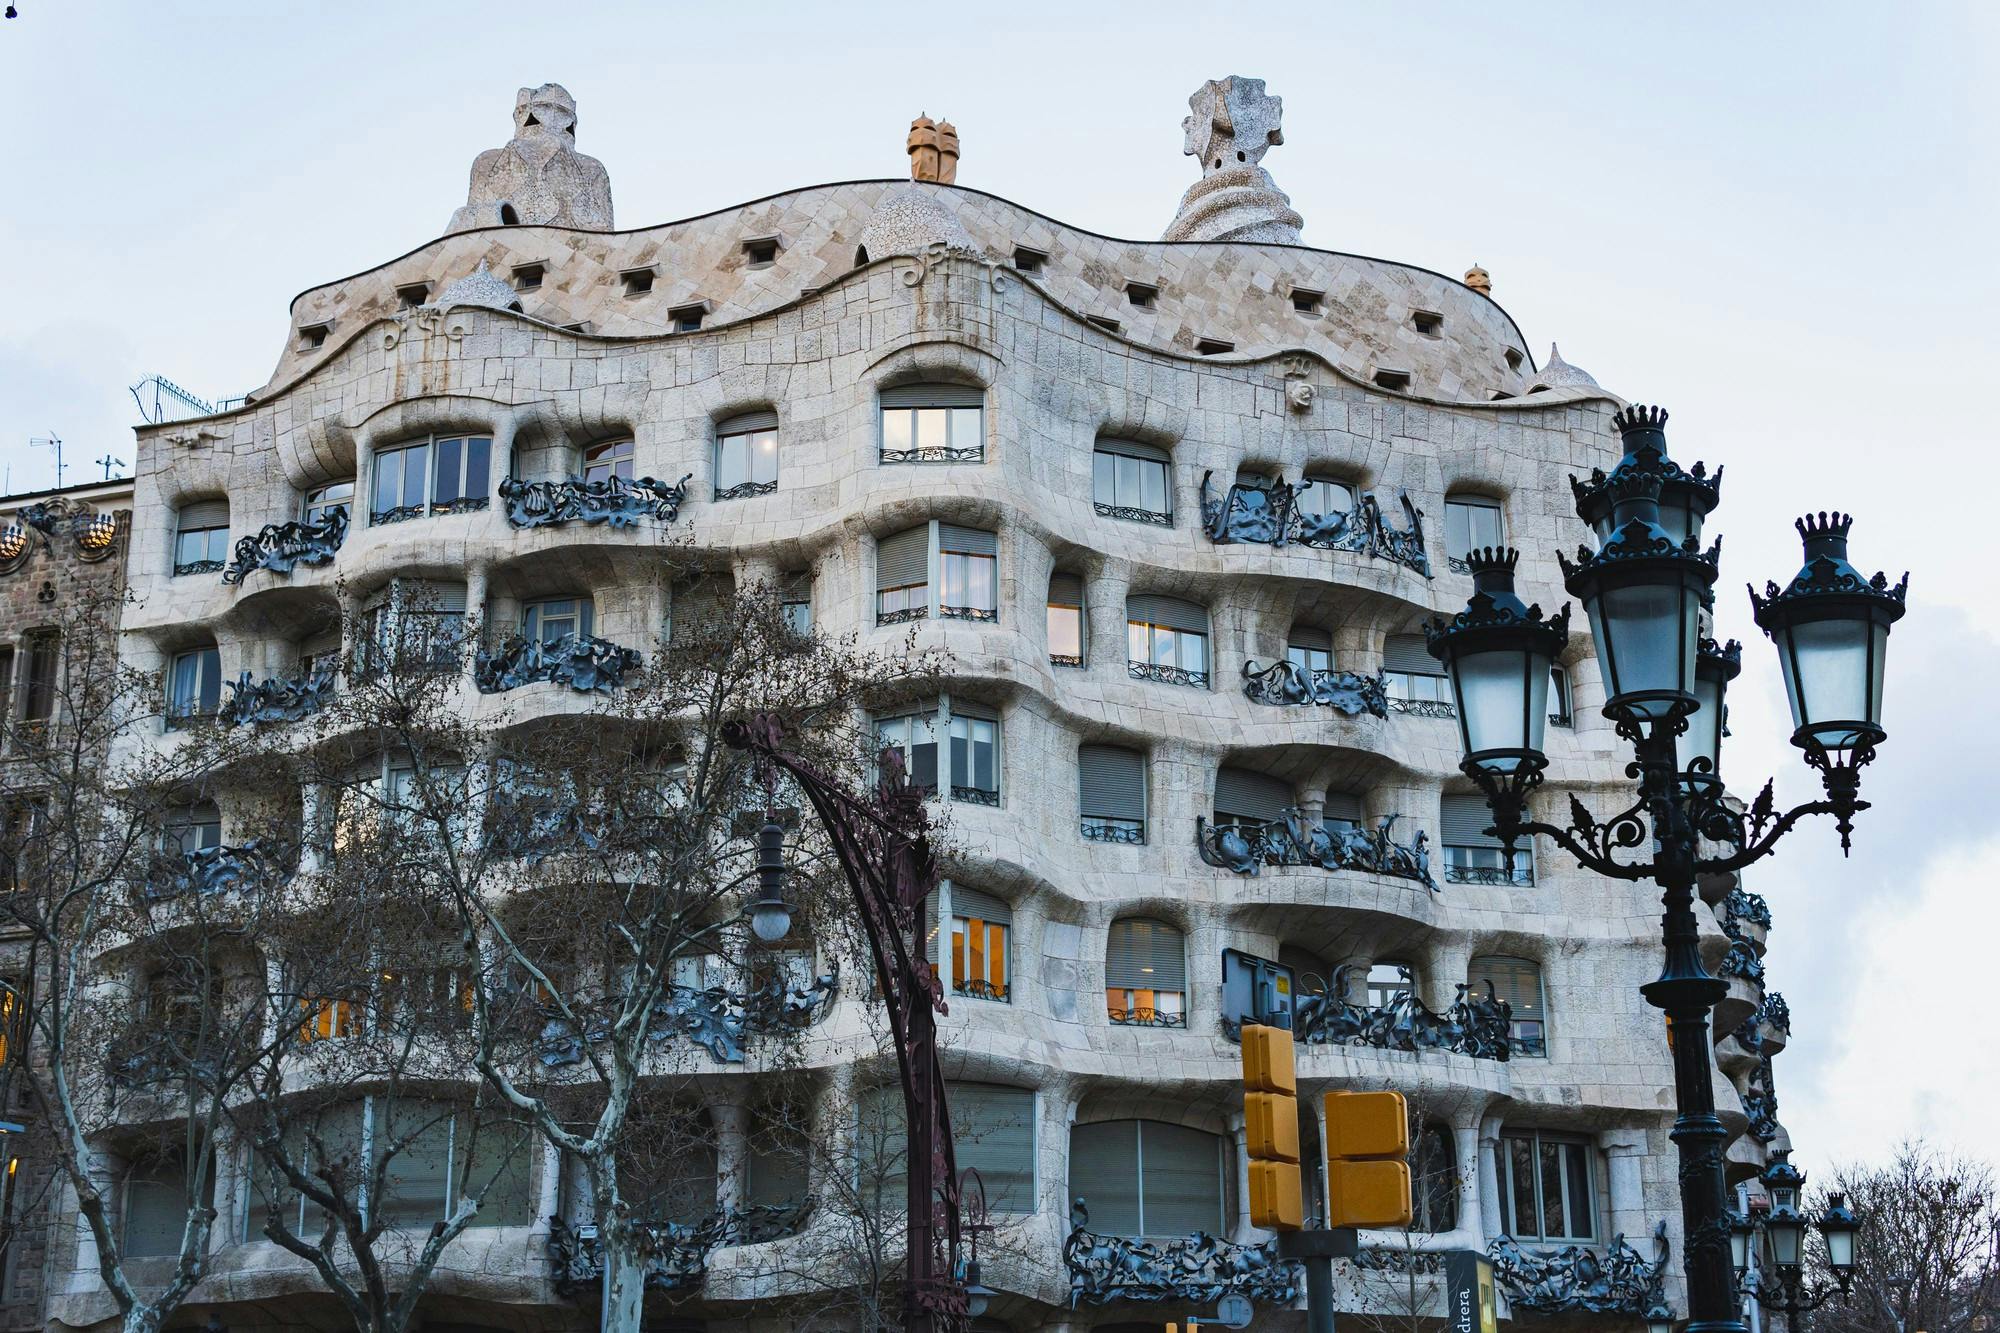 Casa Milà in Barcelona, Spain